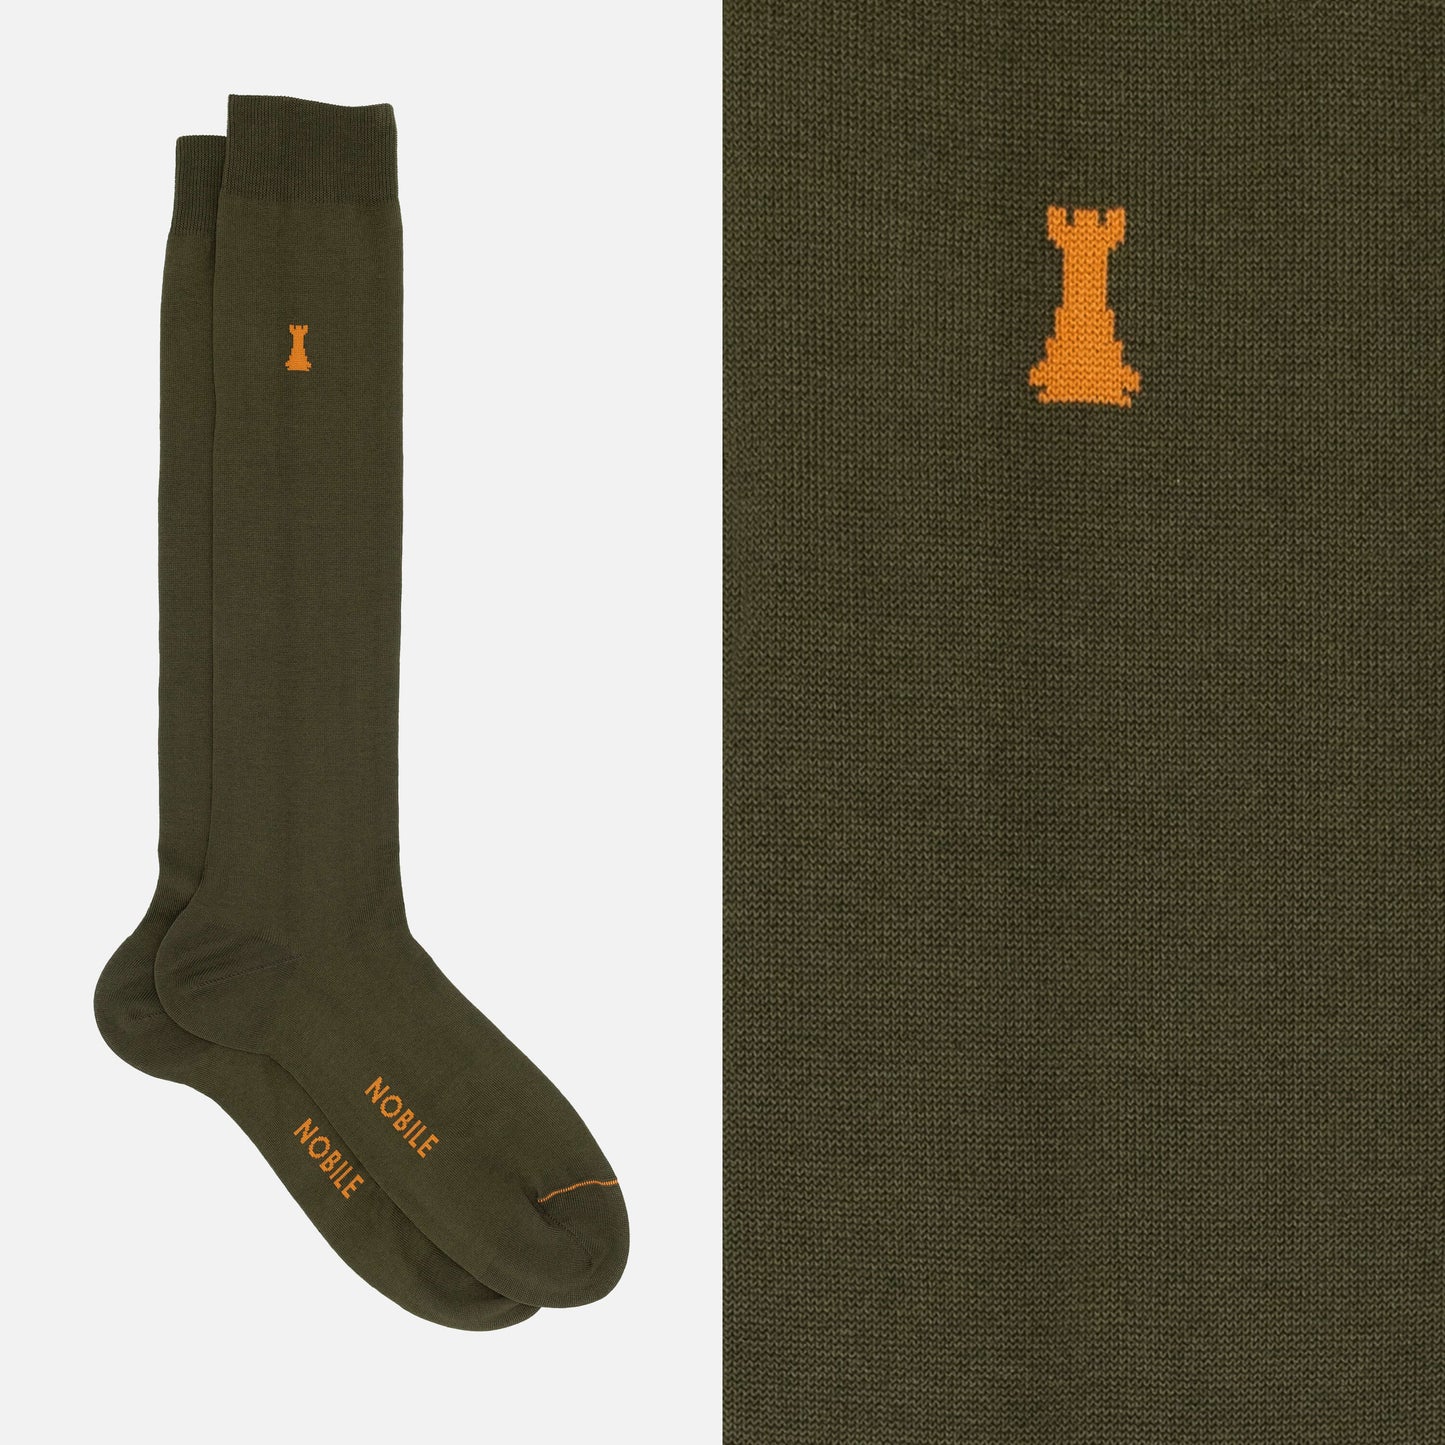 Box of 6 knee high socks - Gentle solid colors